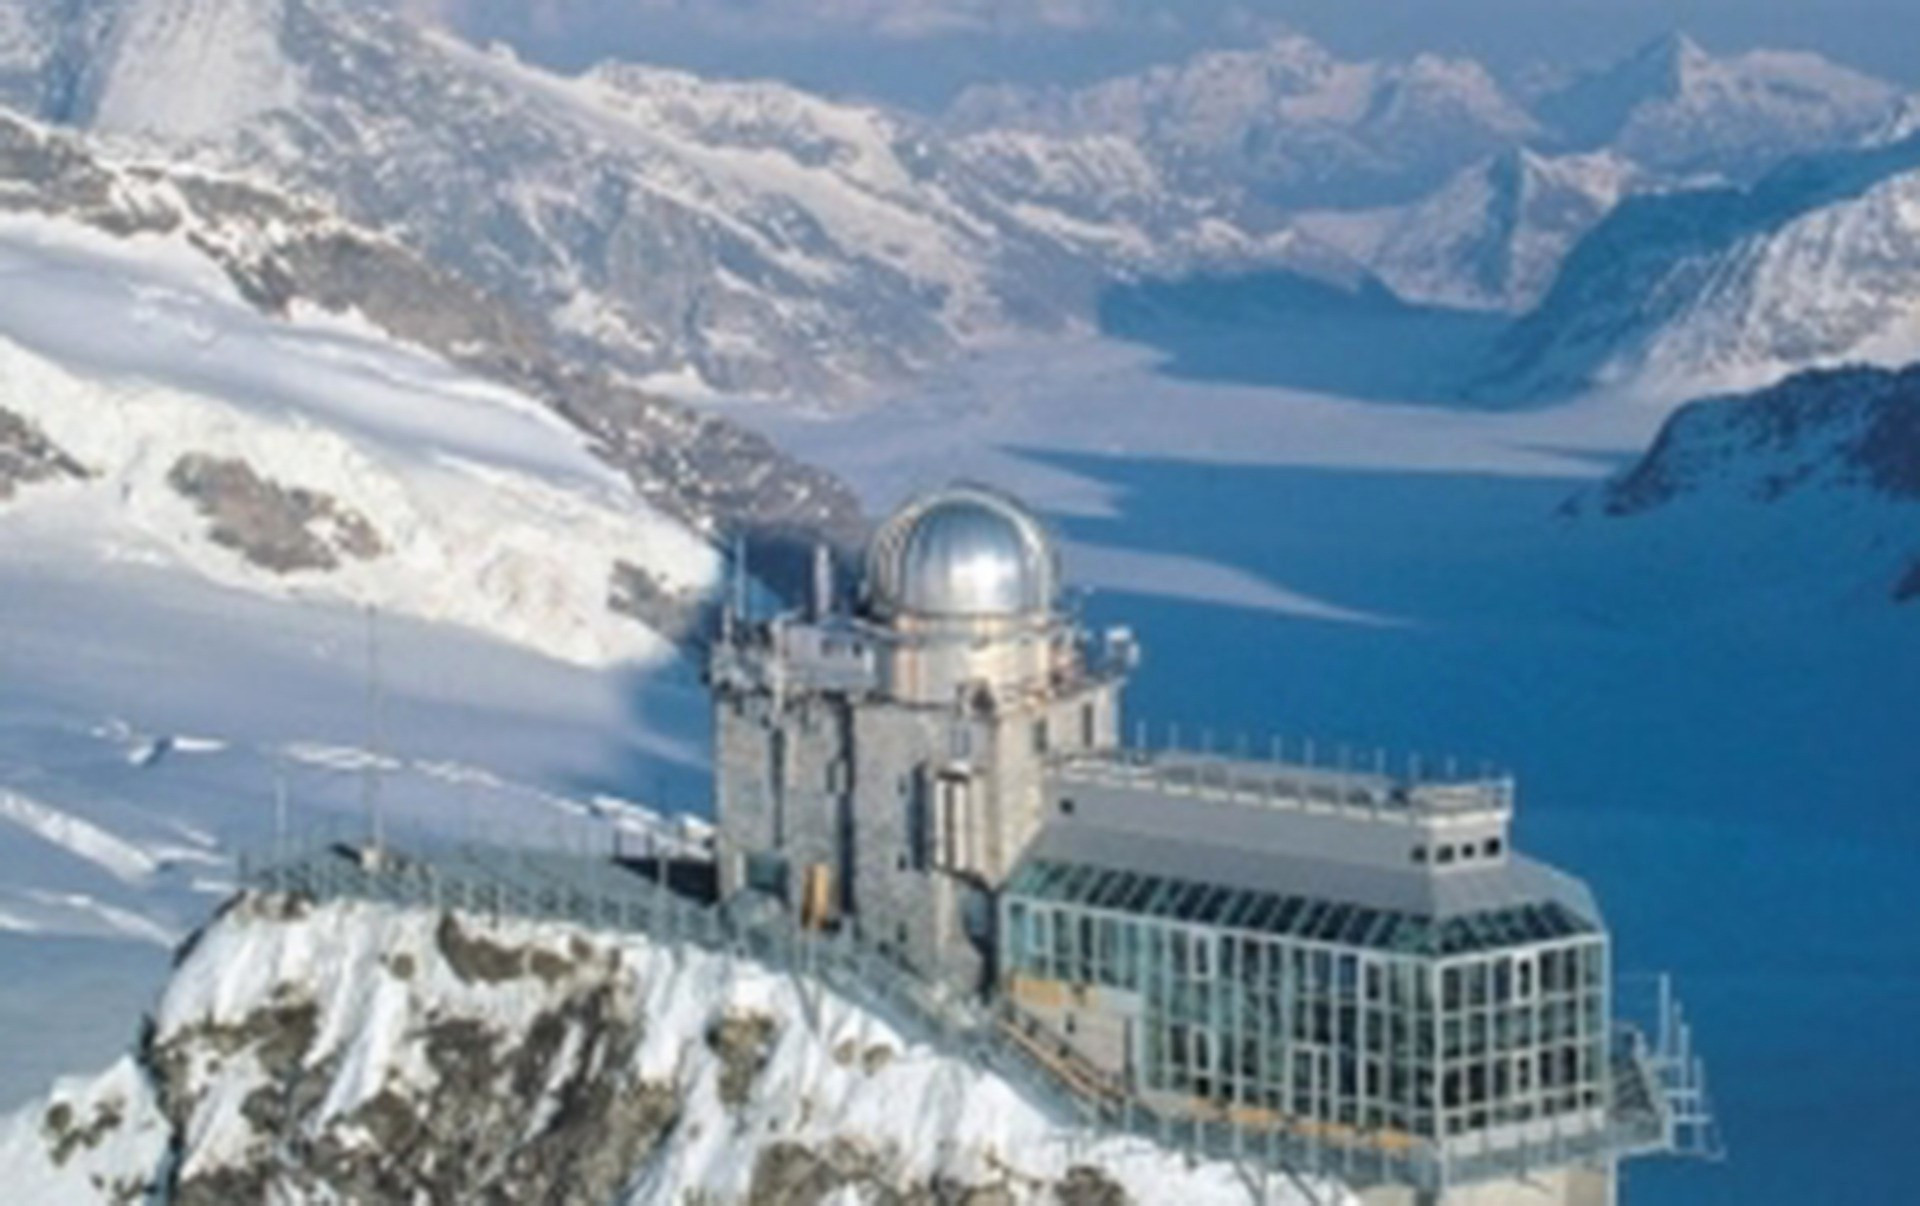 JungfraujochSphinxObservatorium3